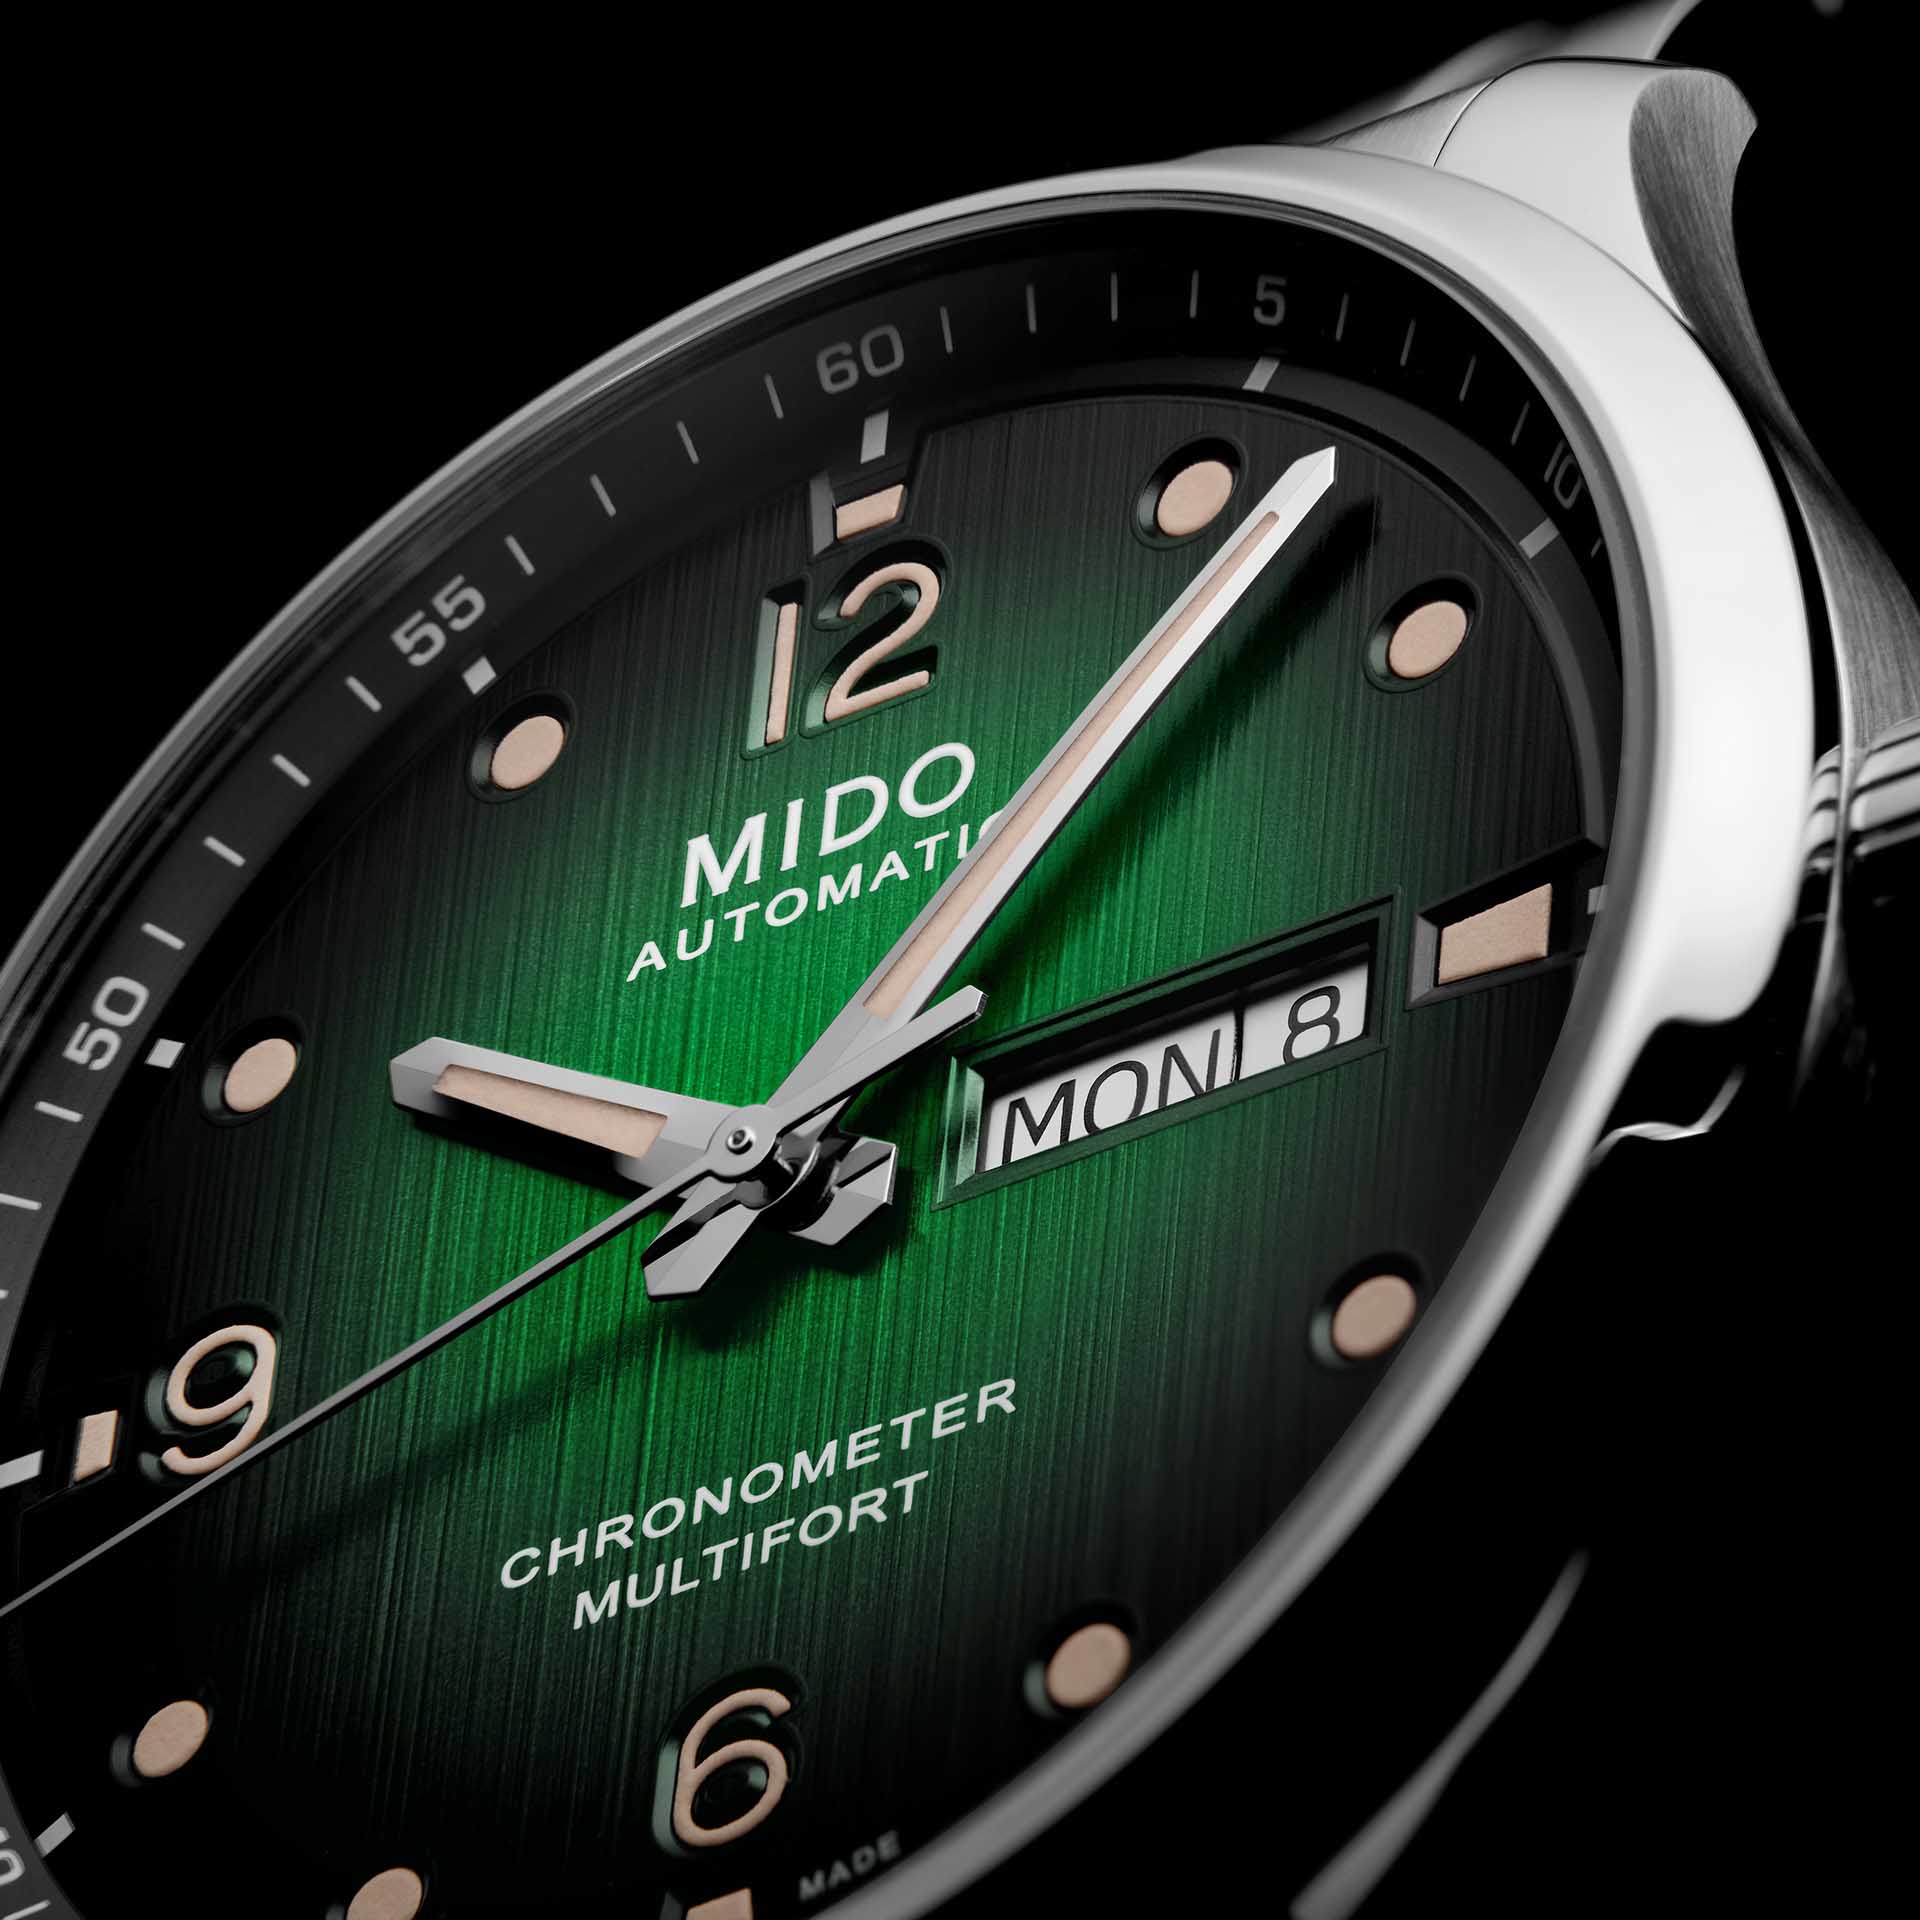 Mido Multifort M Chronometer